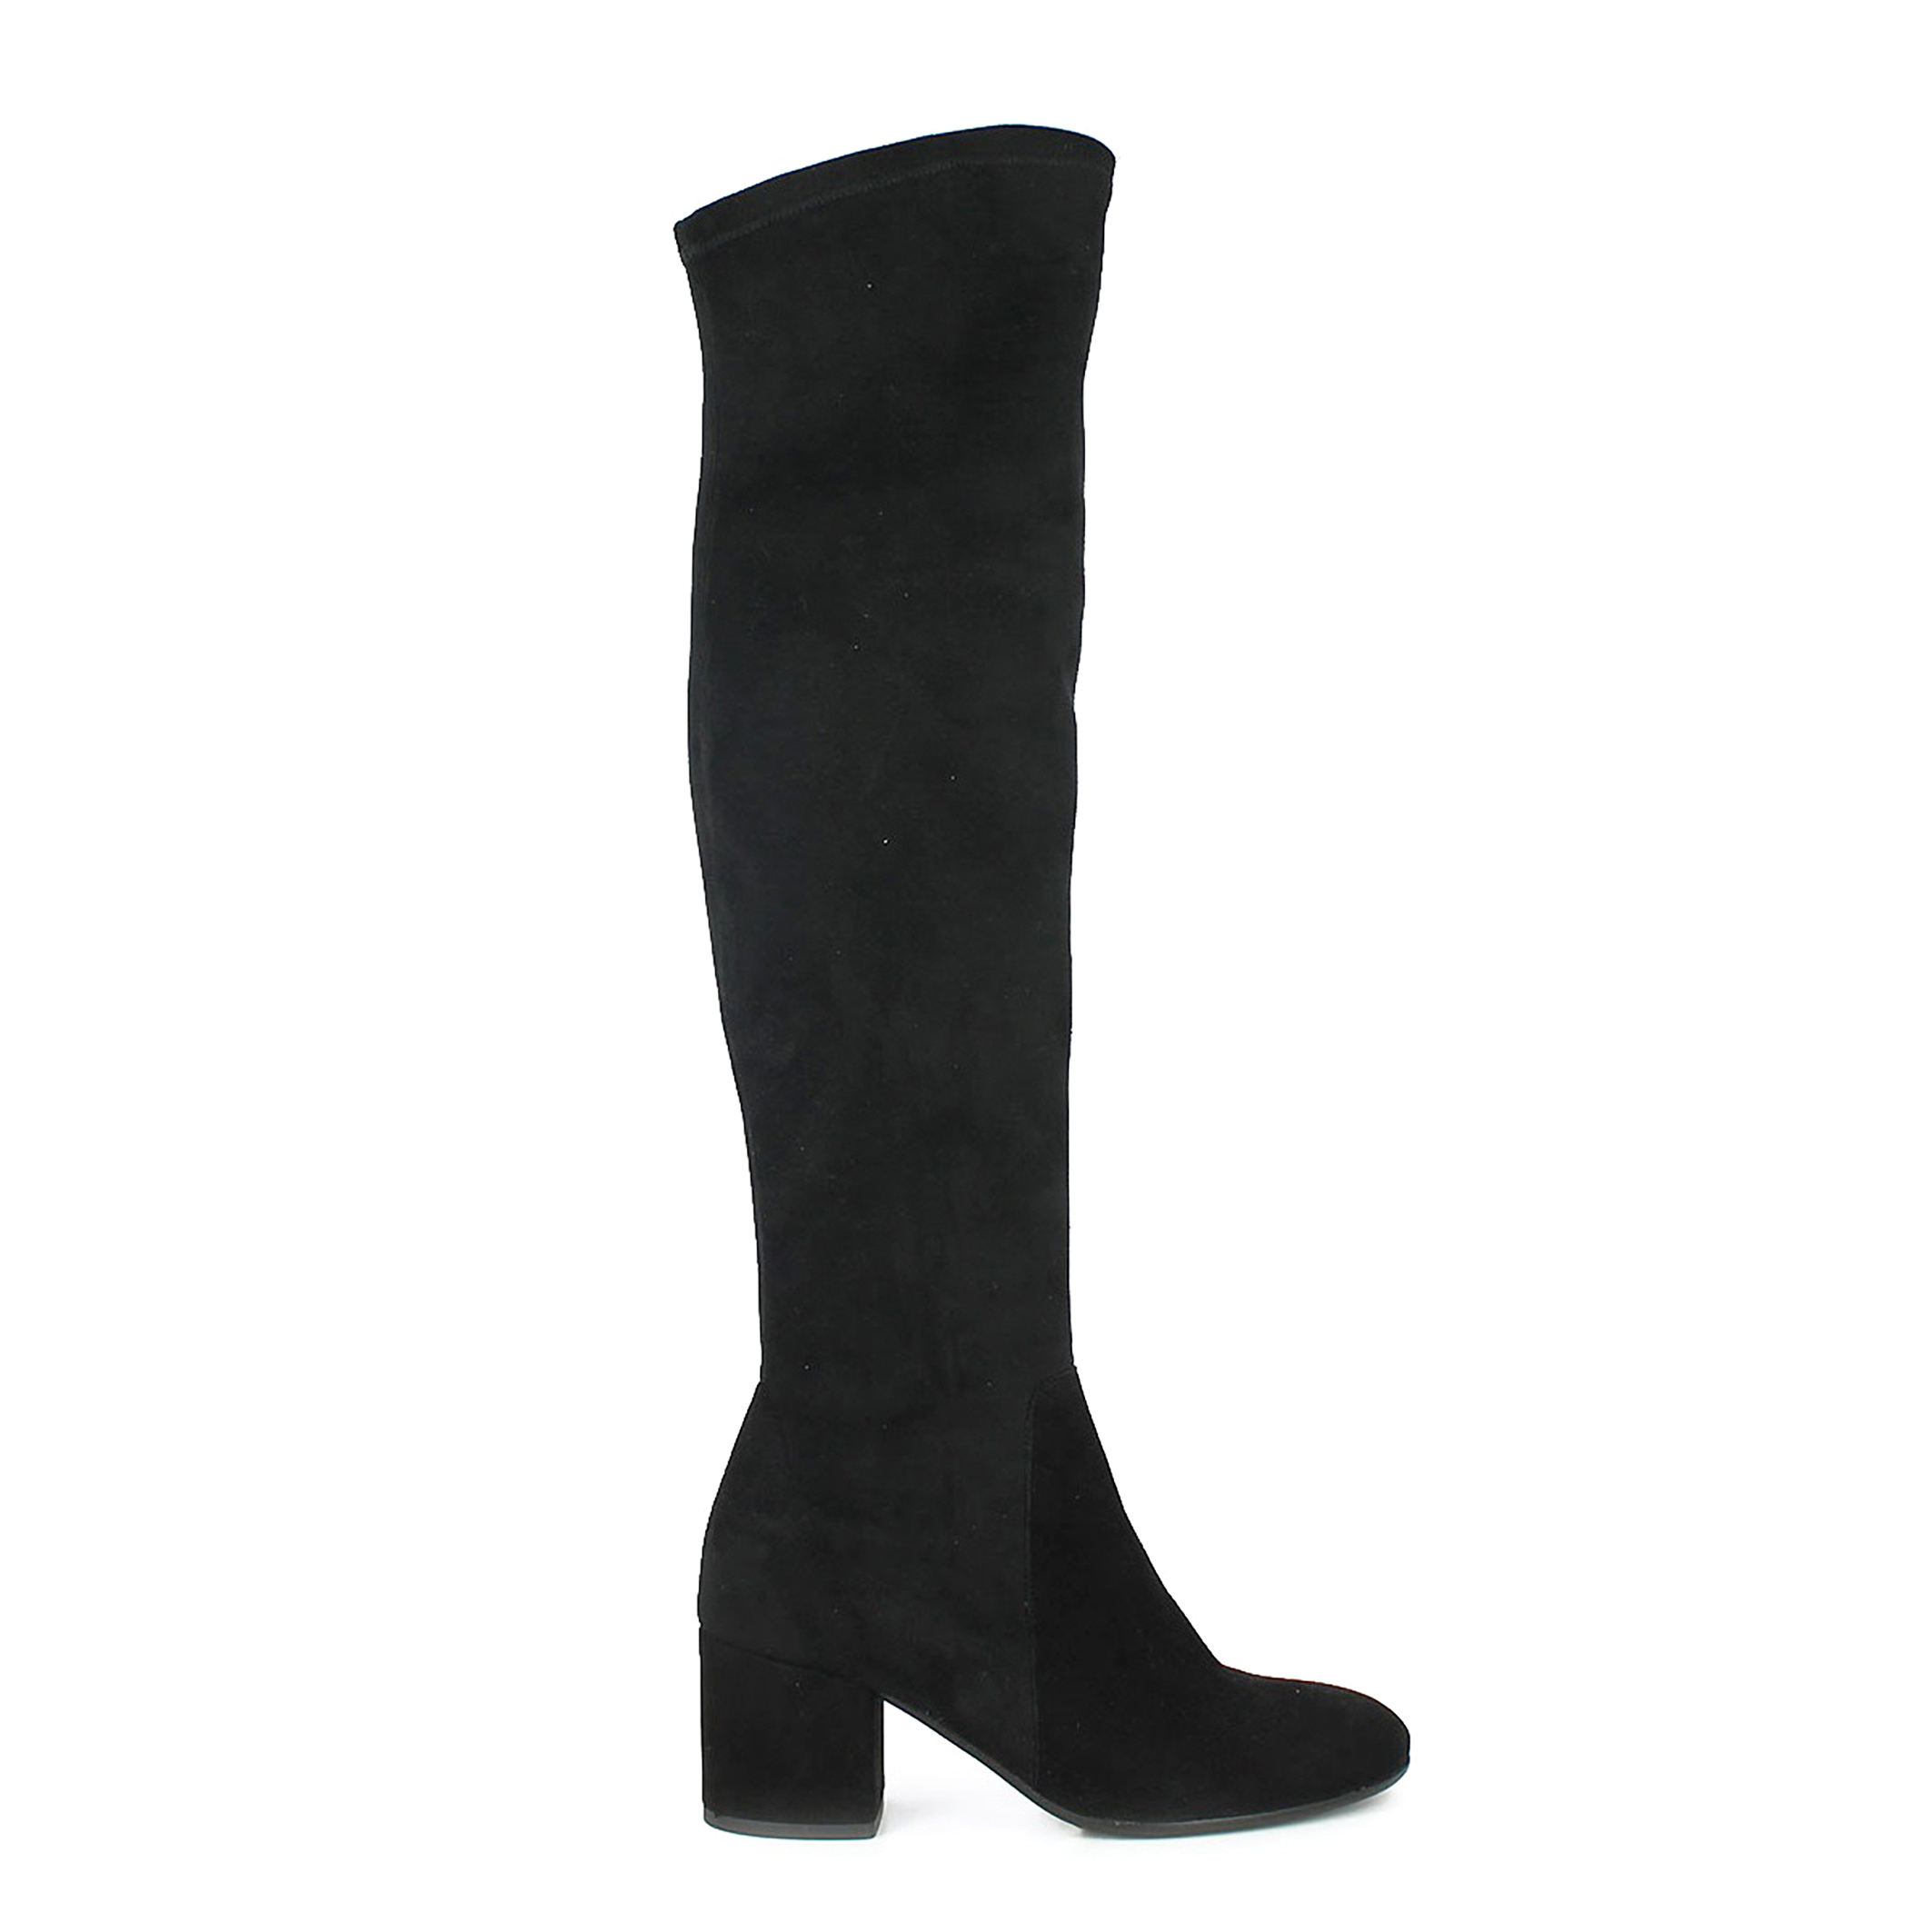 Mia thigh high stretch boots, black, Jonak | La Redoute